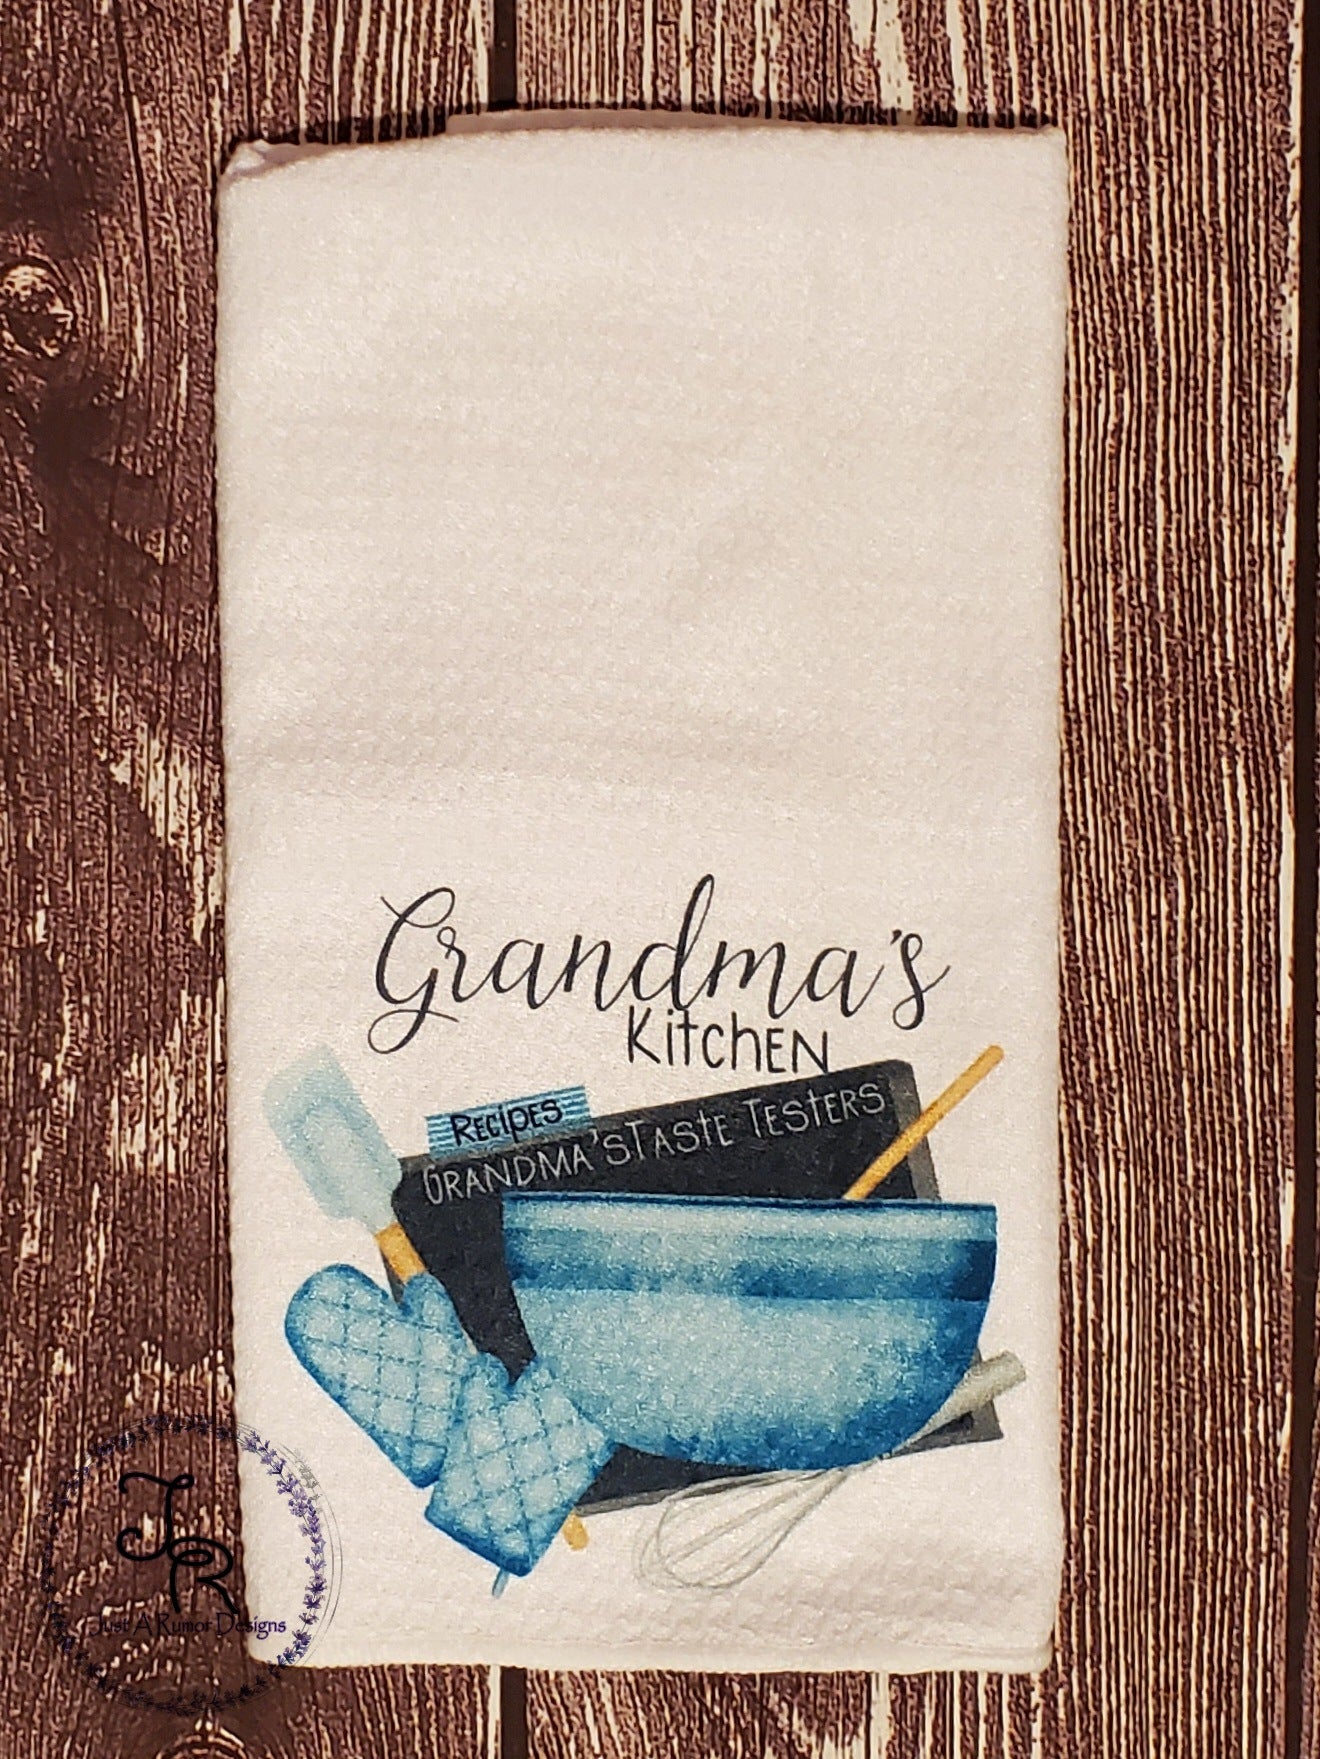 Grandma's Kitchen Towel